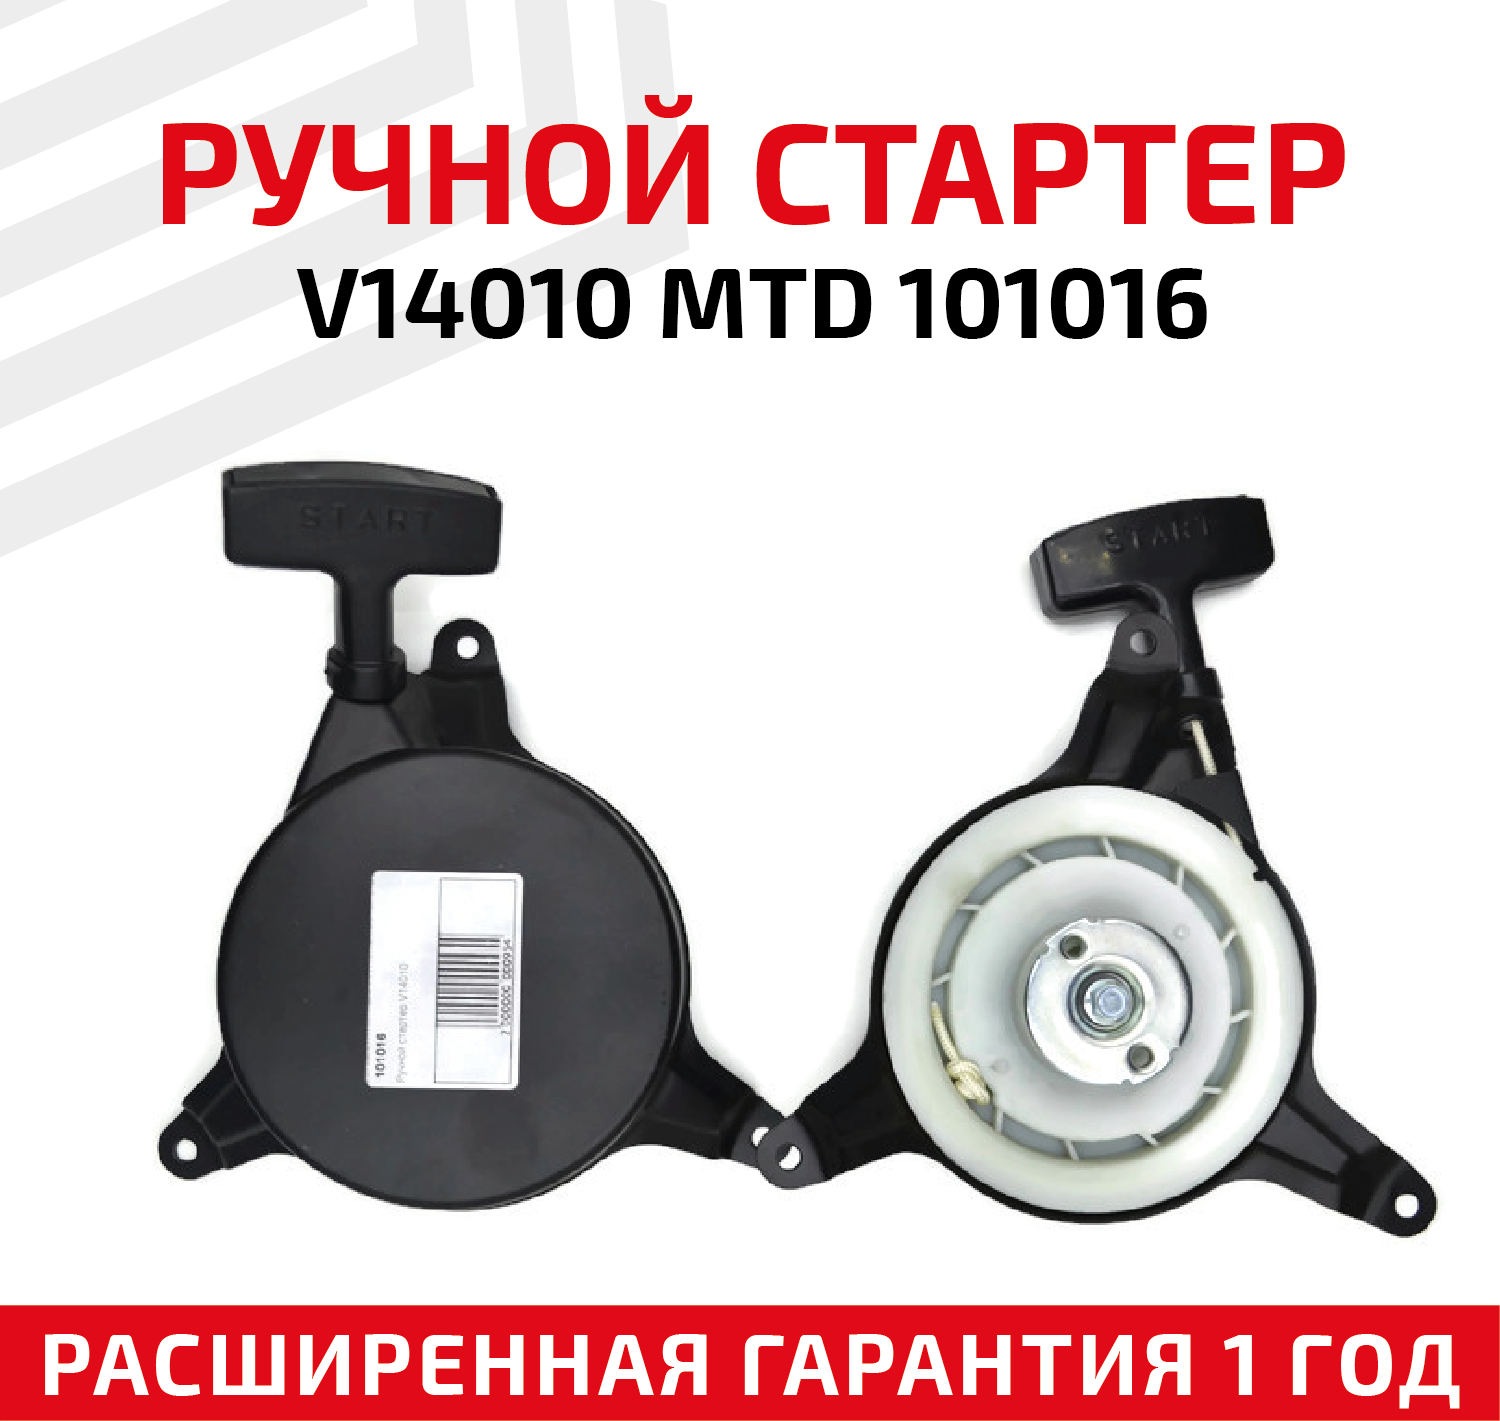 Ручной стартер V14010 MTD 101016